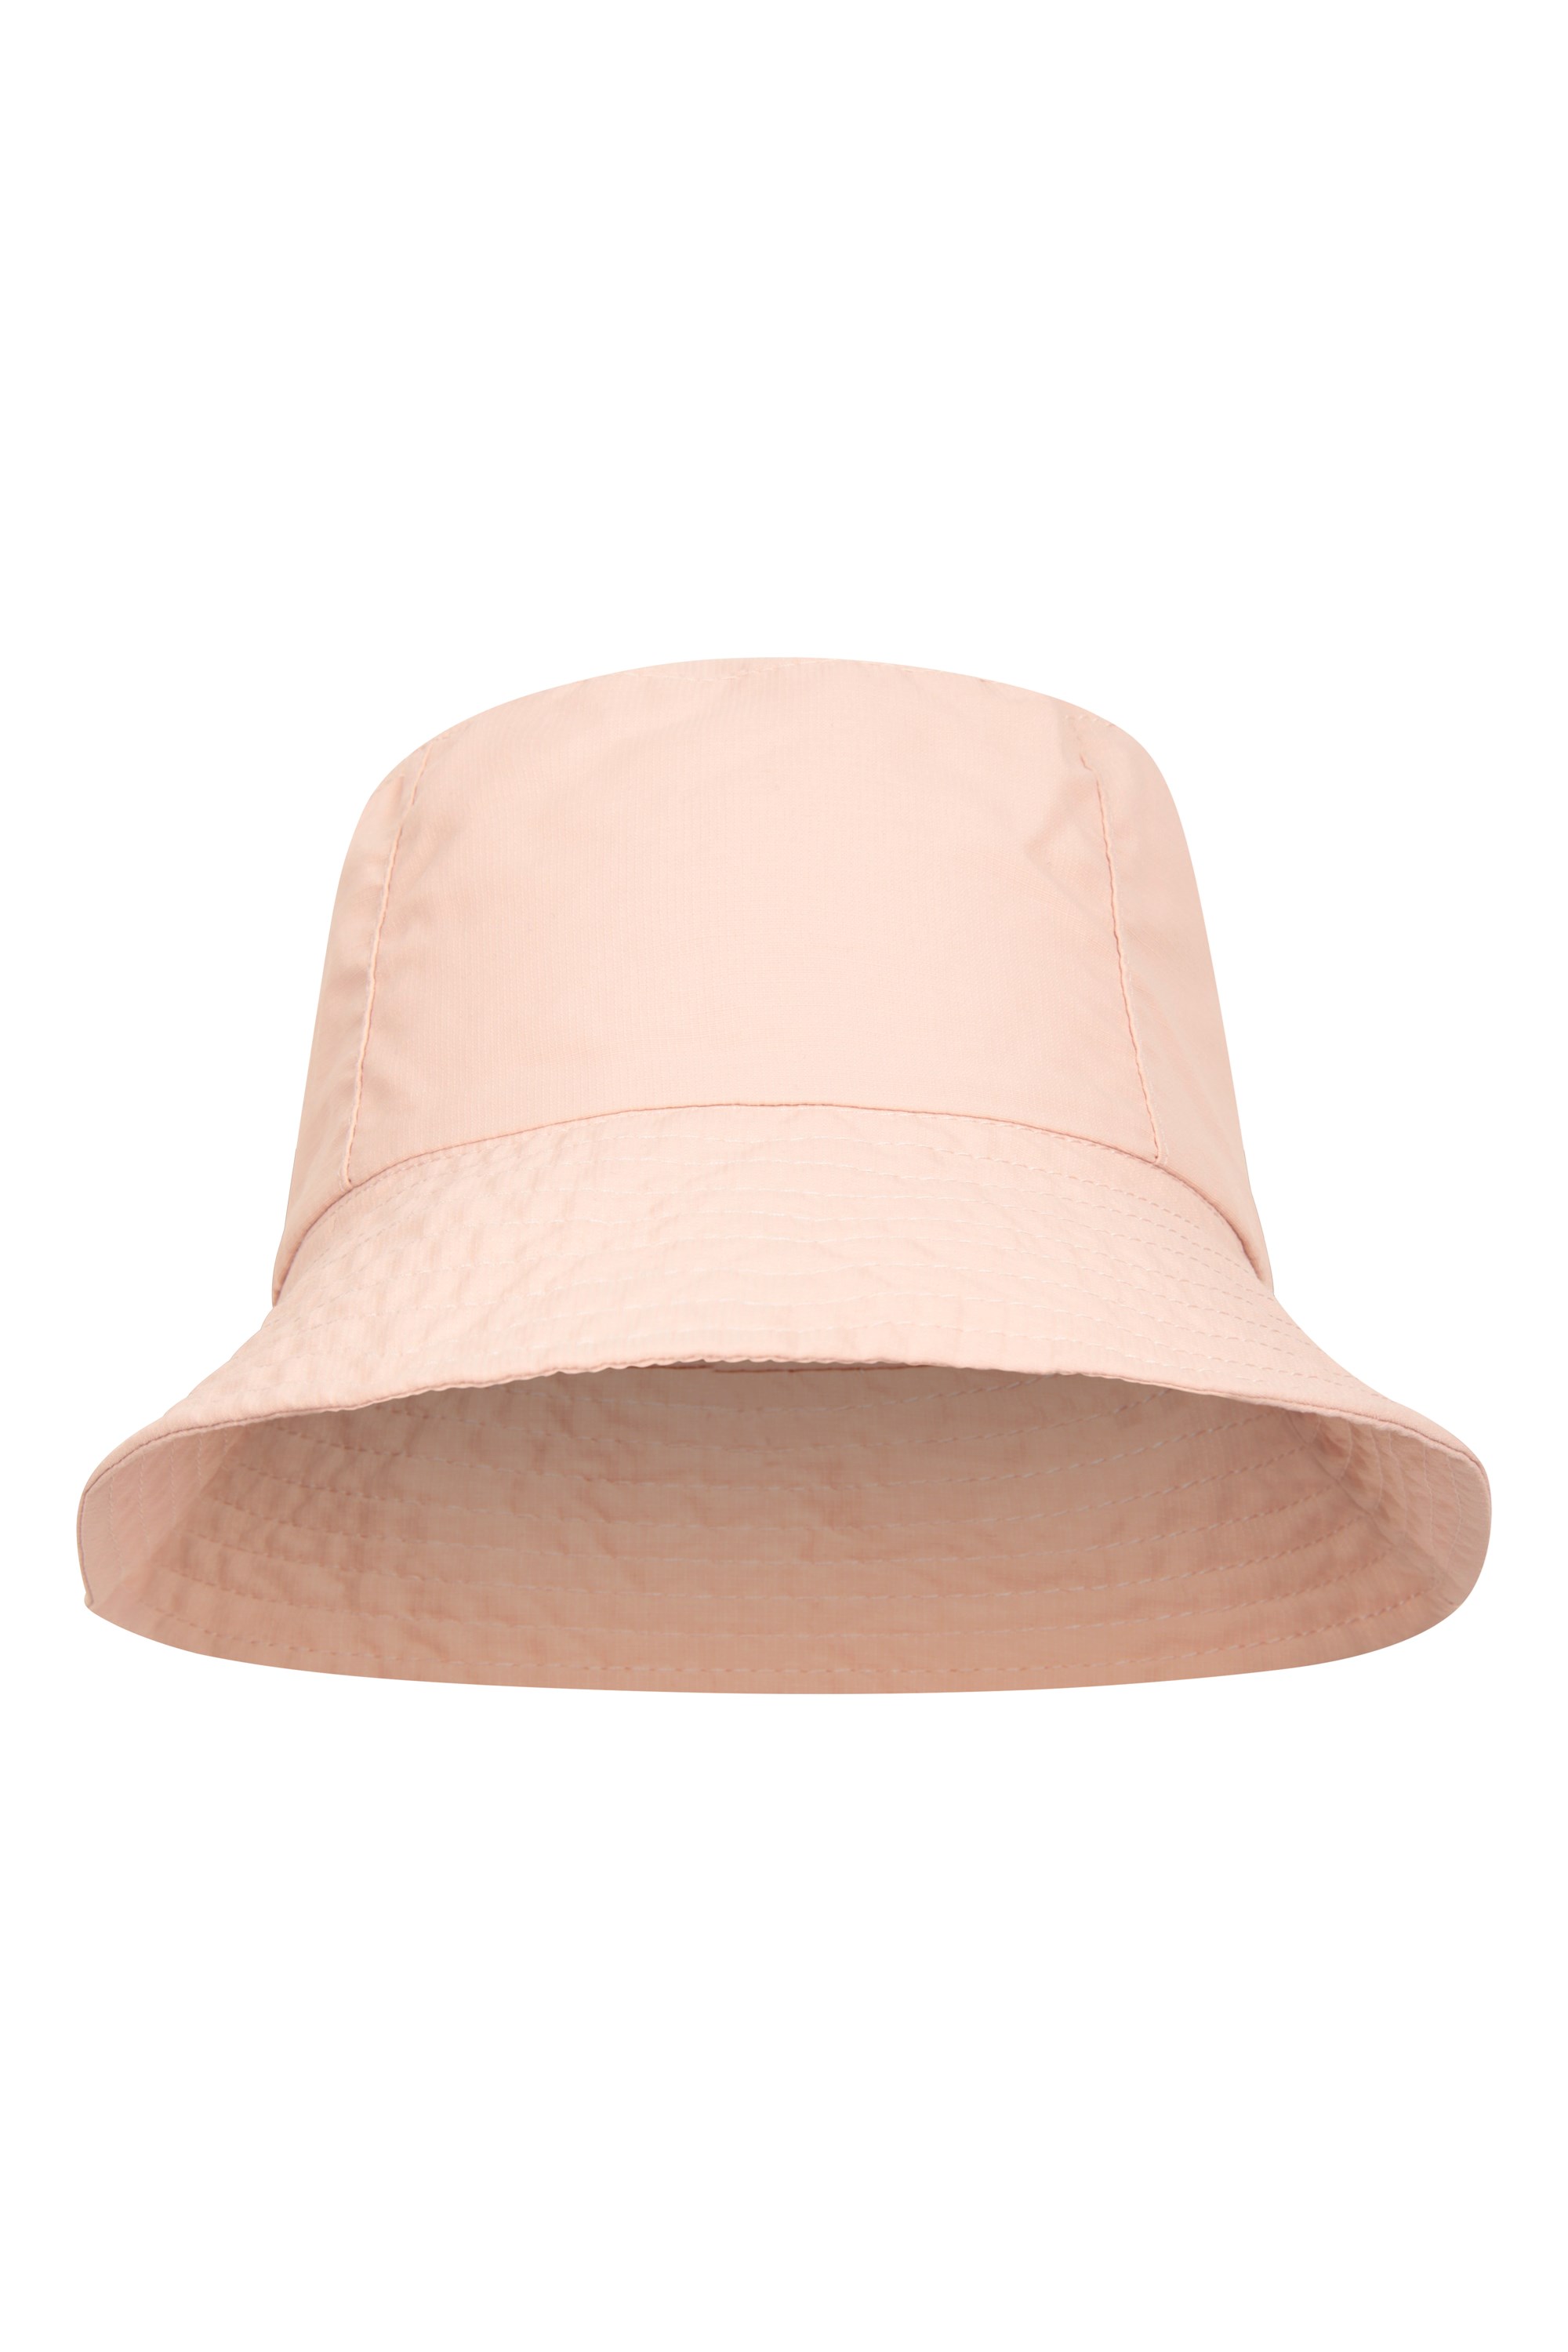 Icon Ladies Waterproof & WindProof Bucket Hat - Navy (L/XL) - One